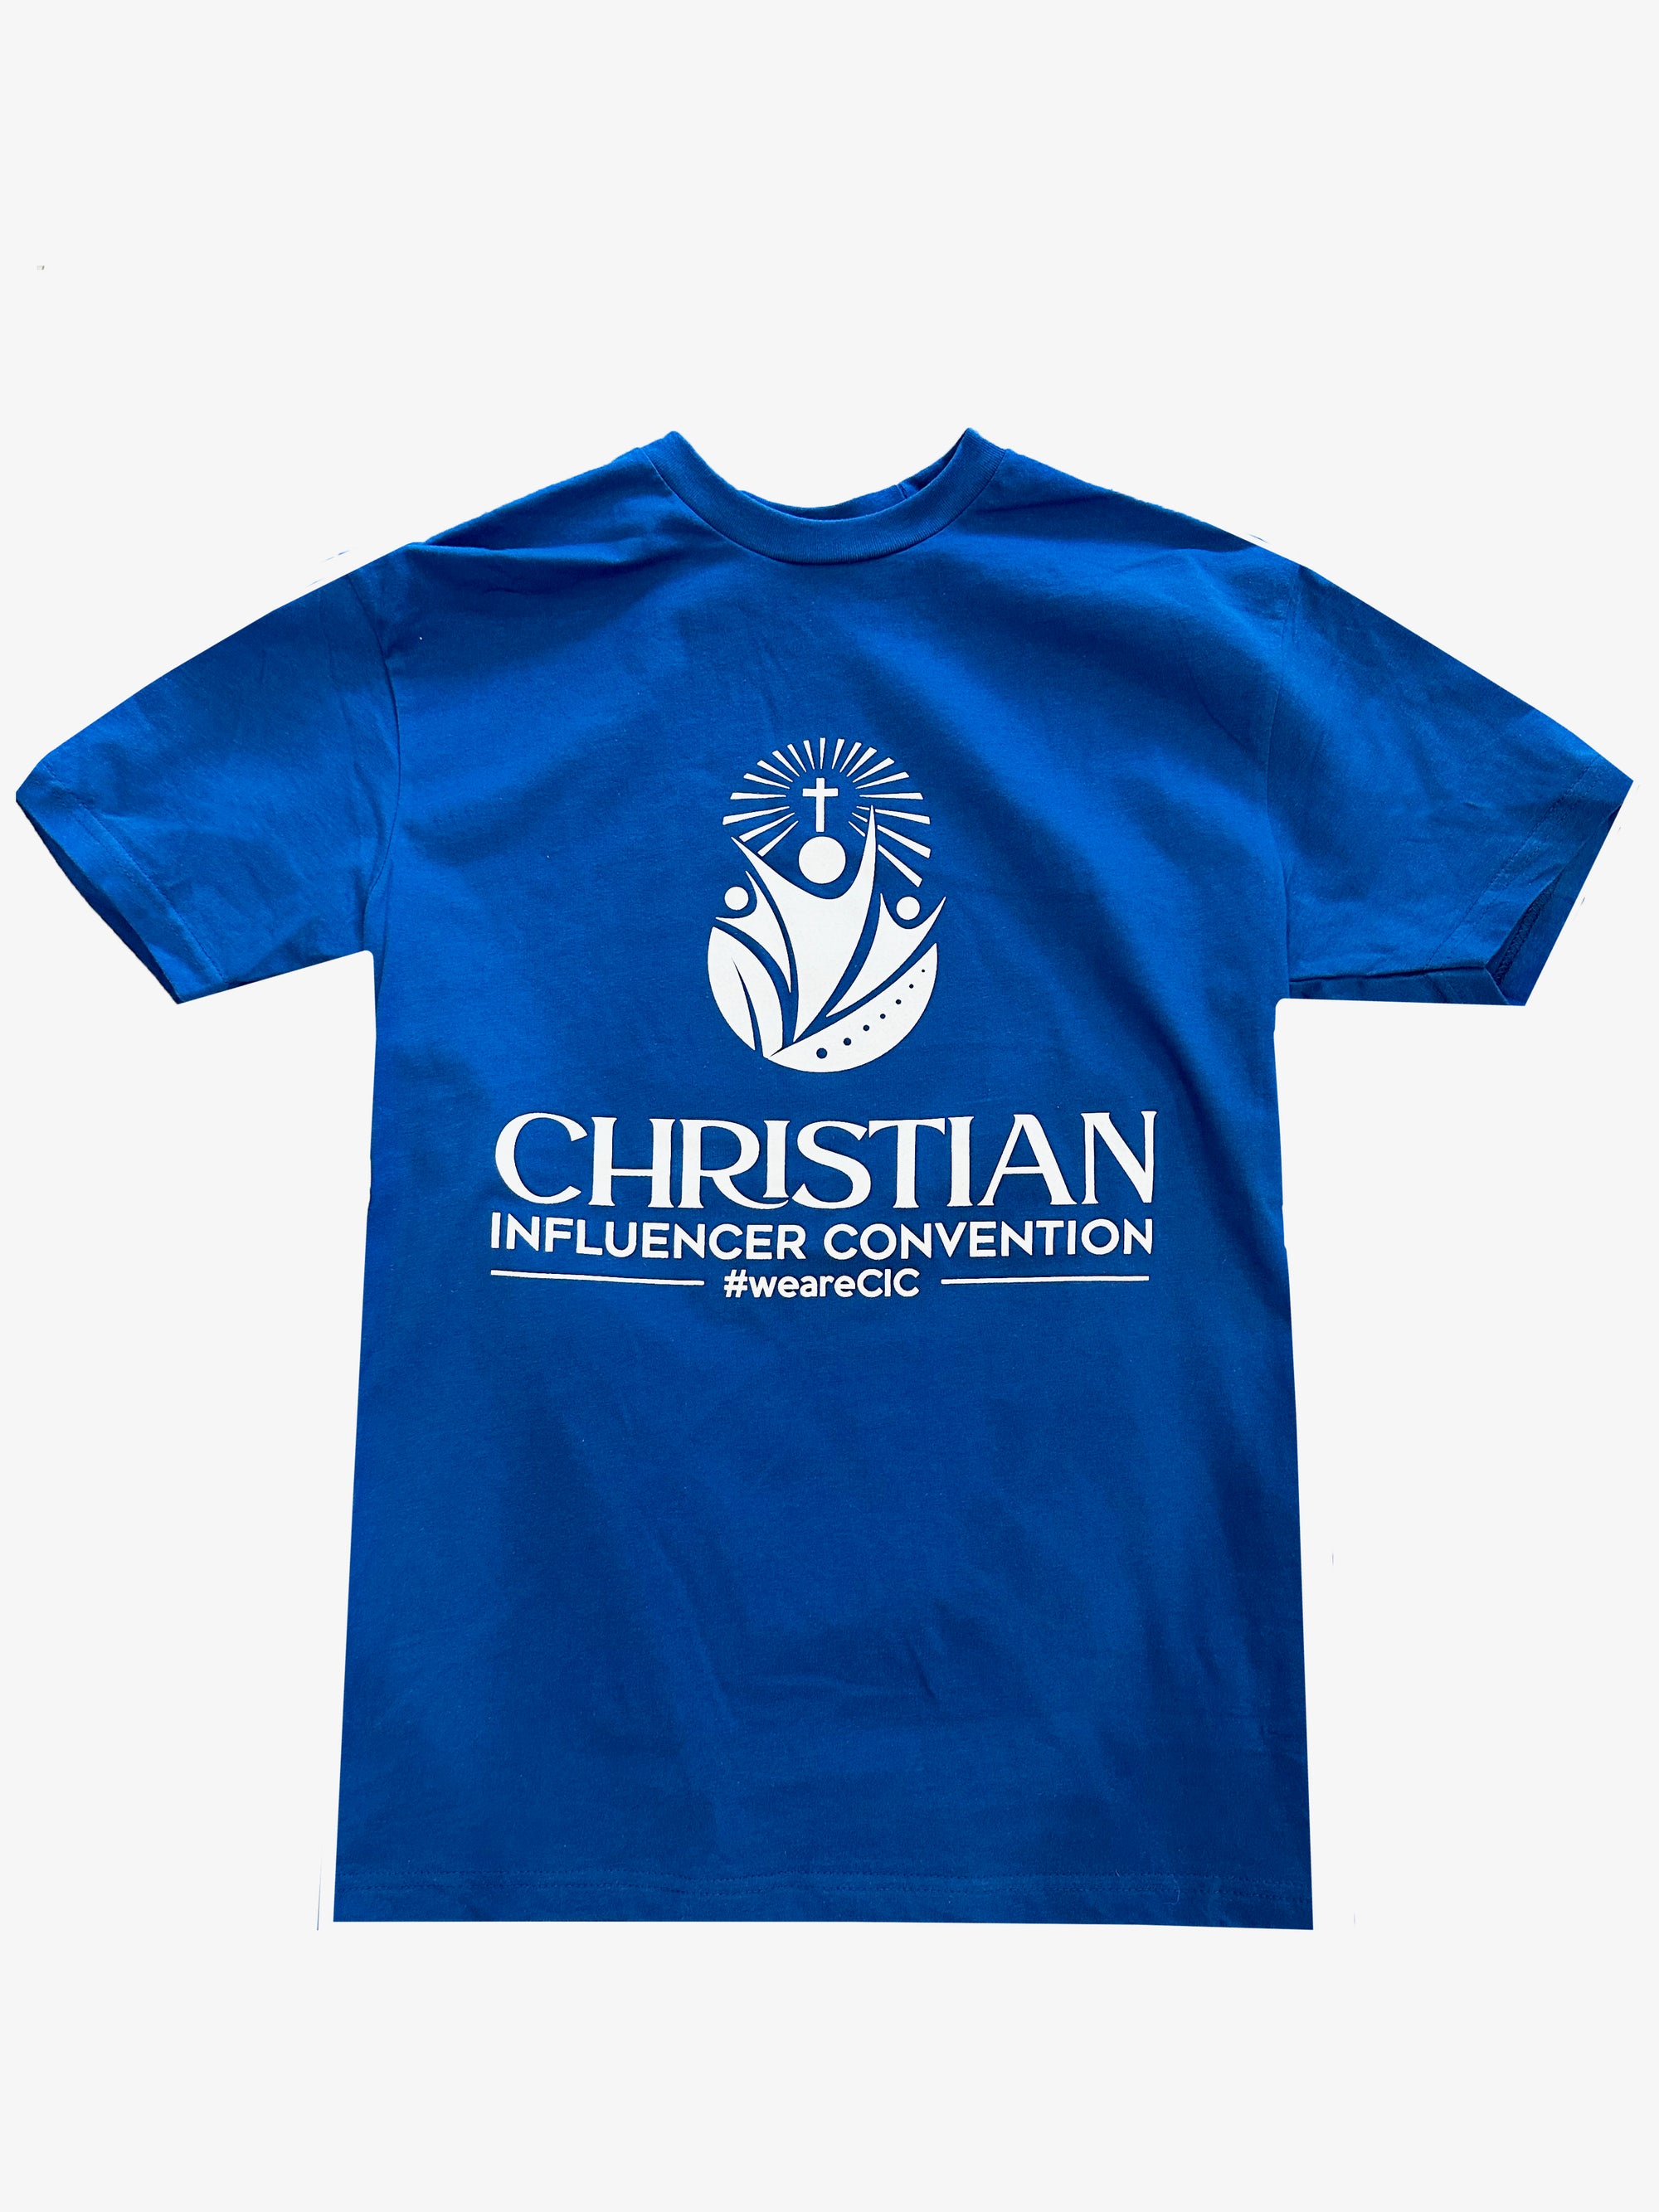 Christian Influencer Convention T-Shirt